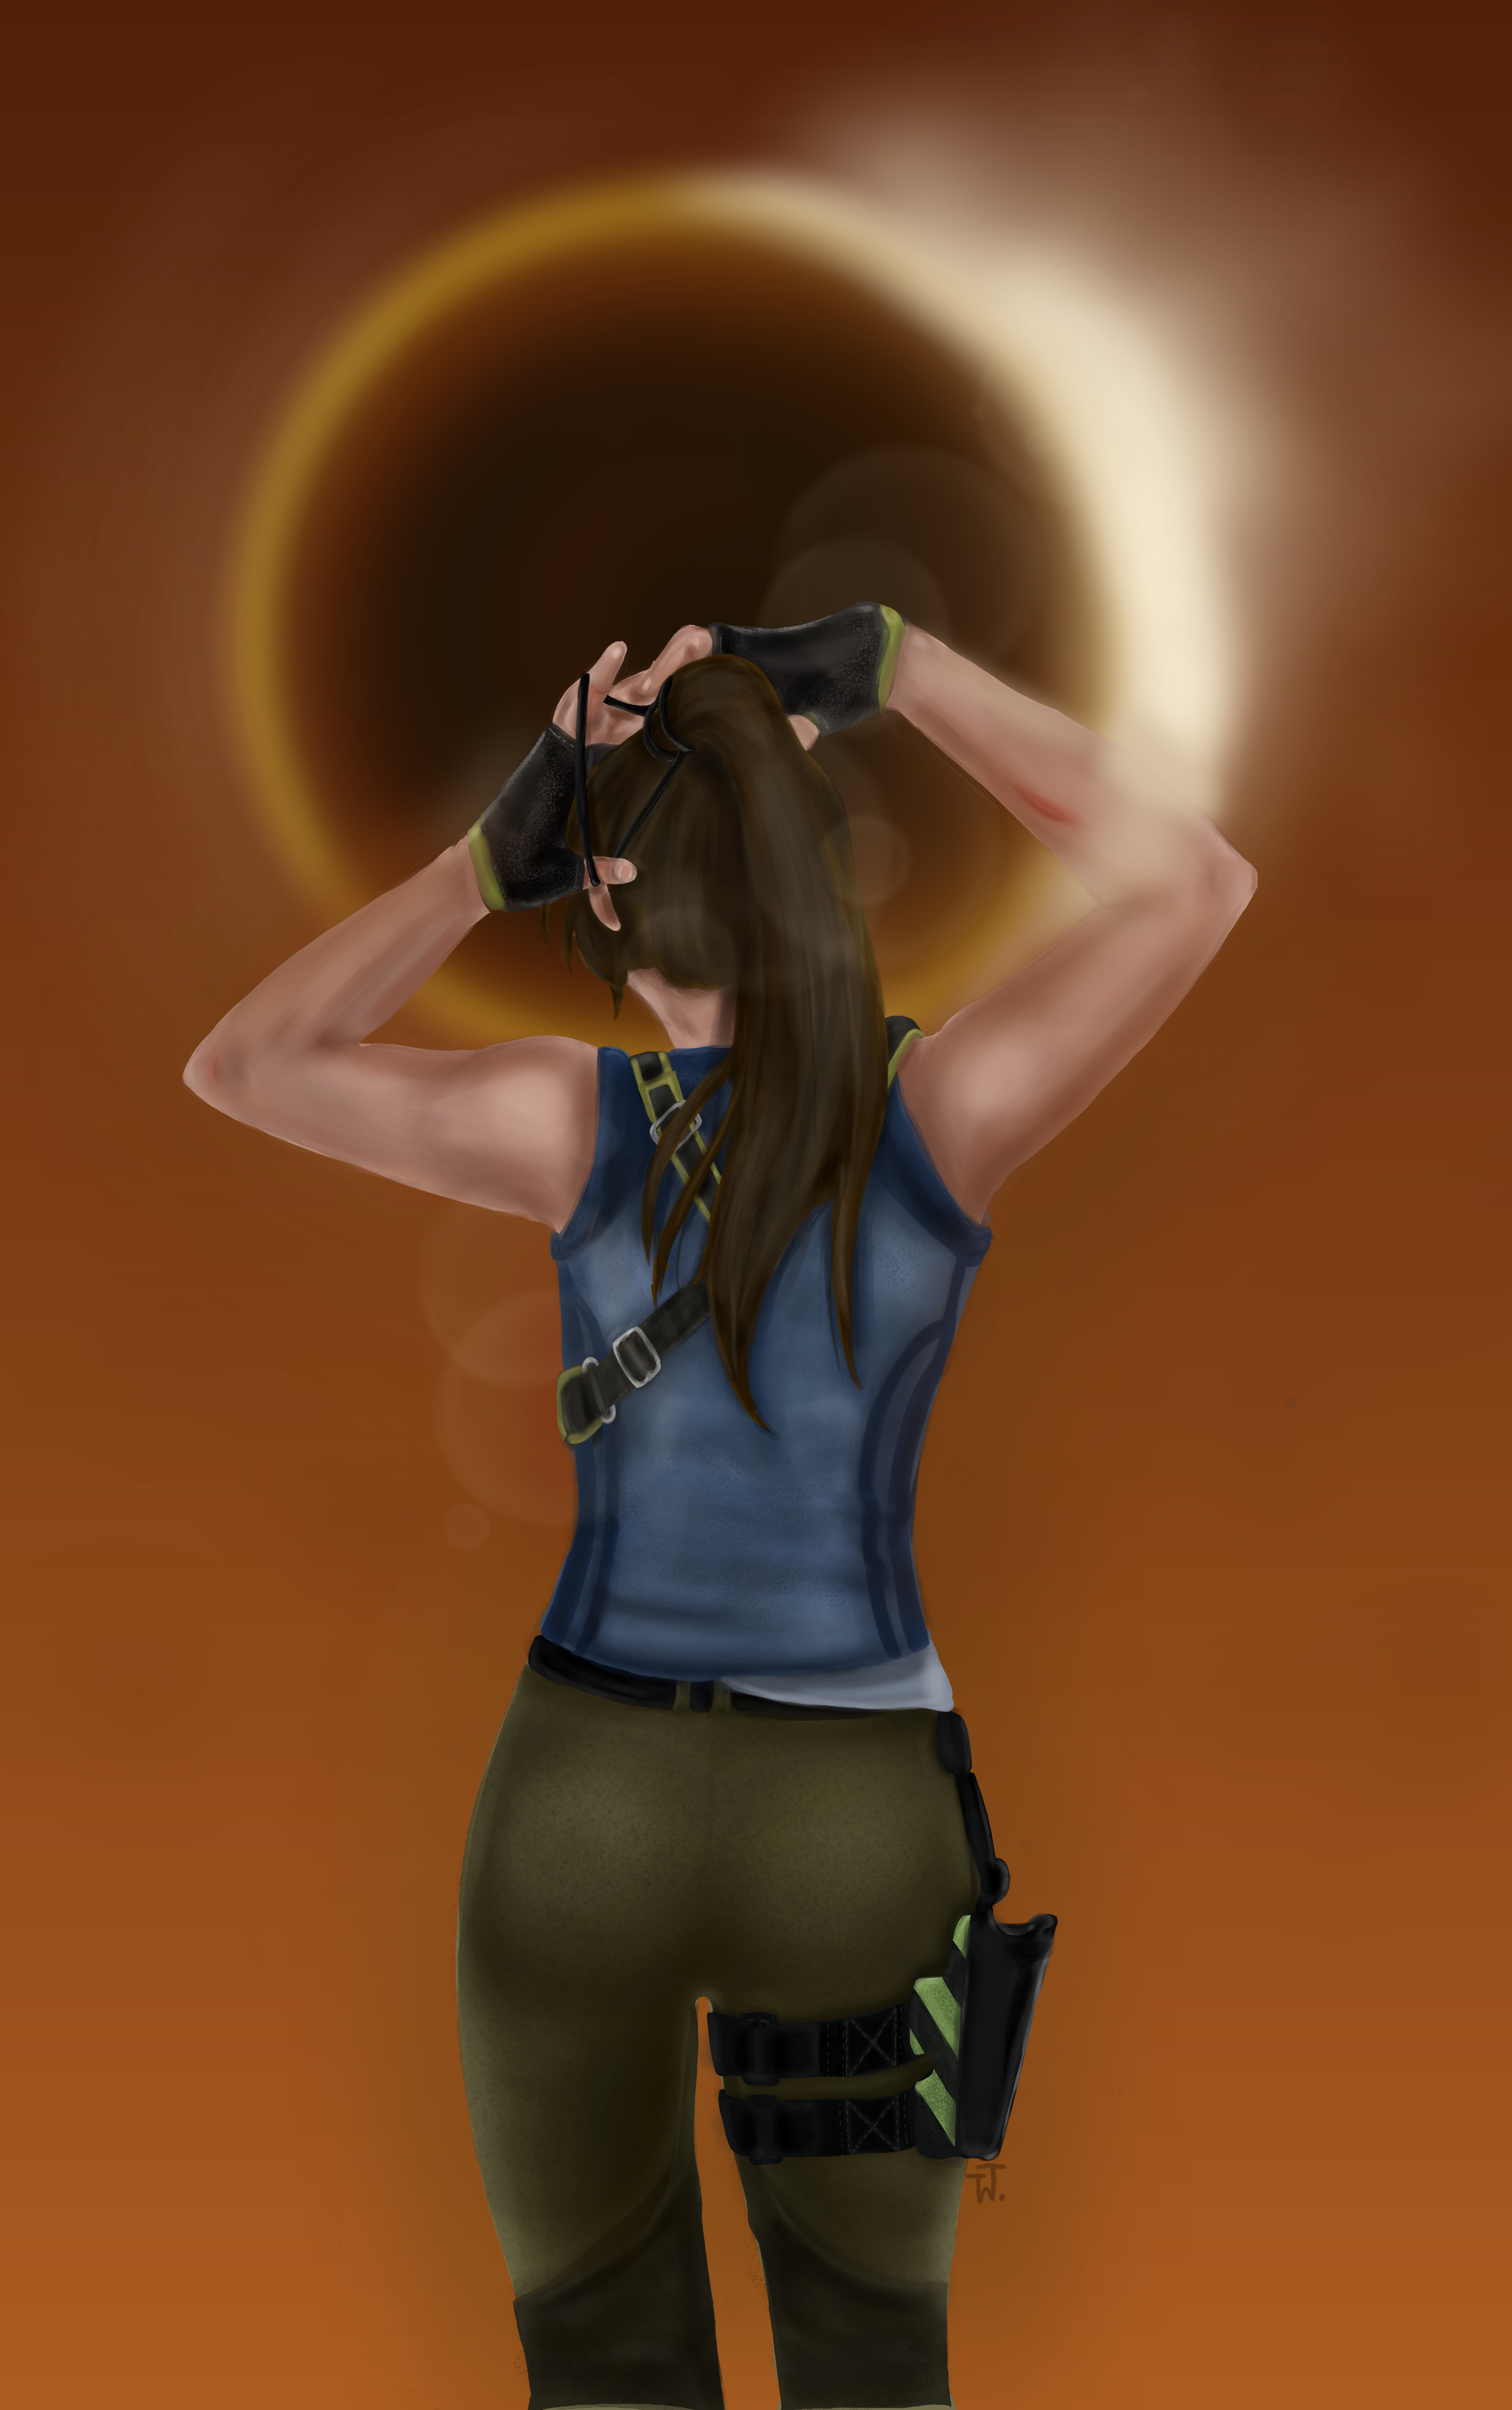 Lara Croft in Tomb Raider by ArtML30 on DeviantArt